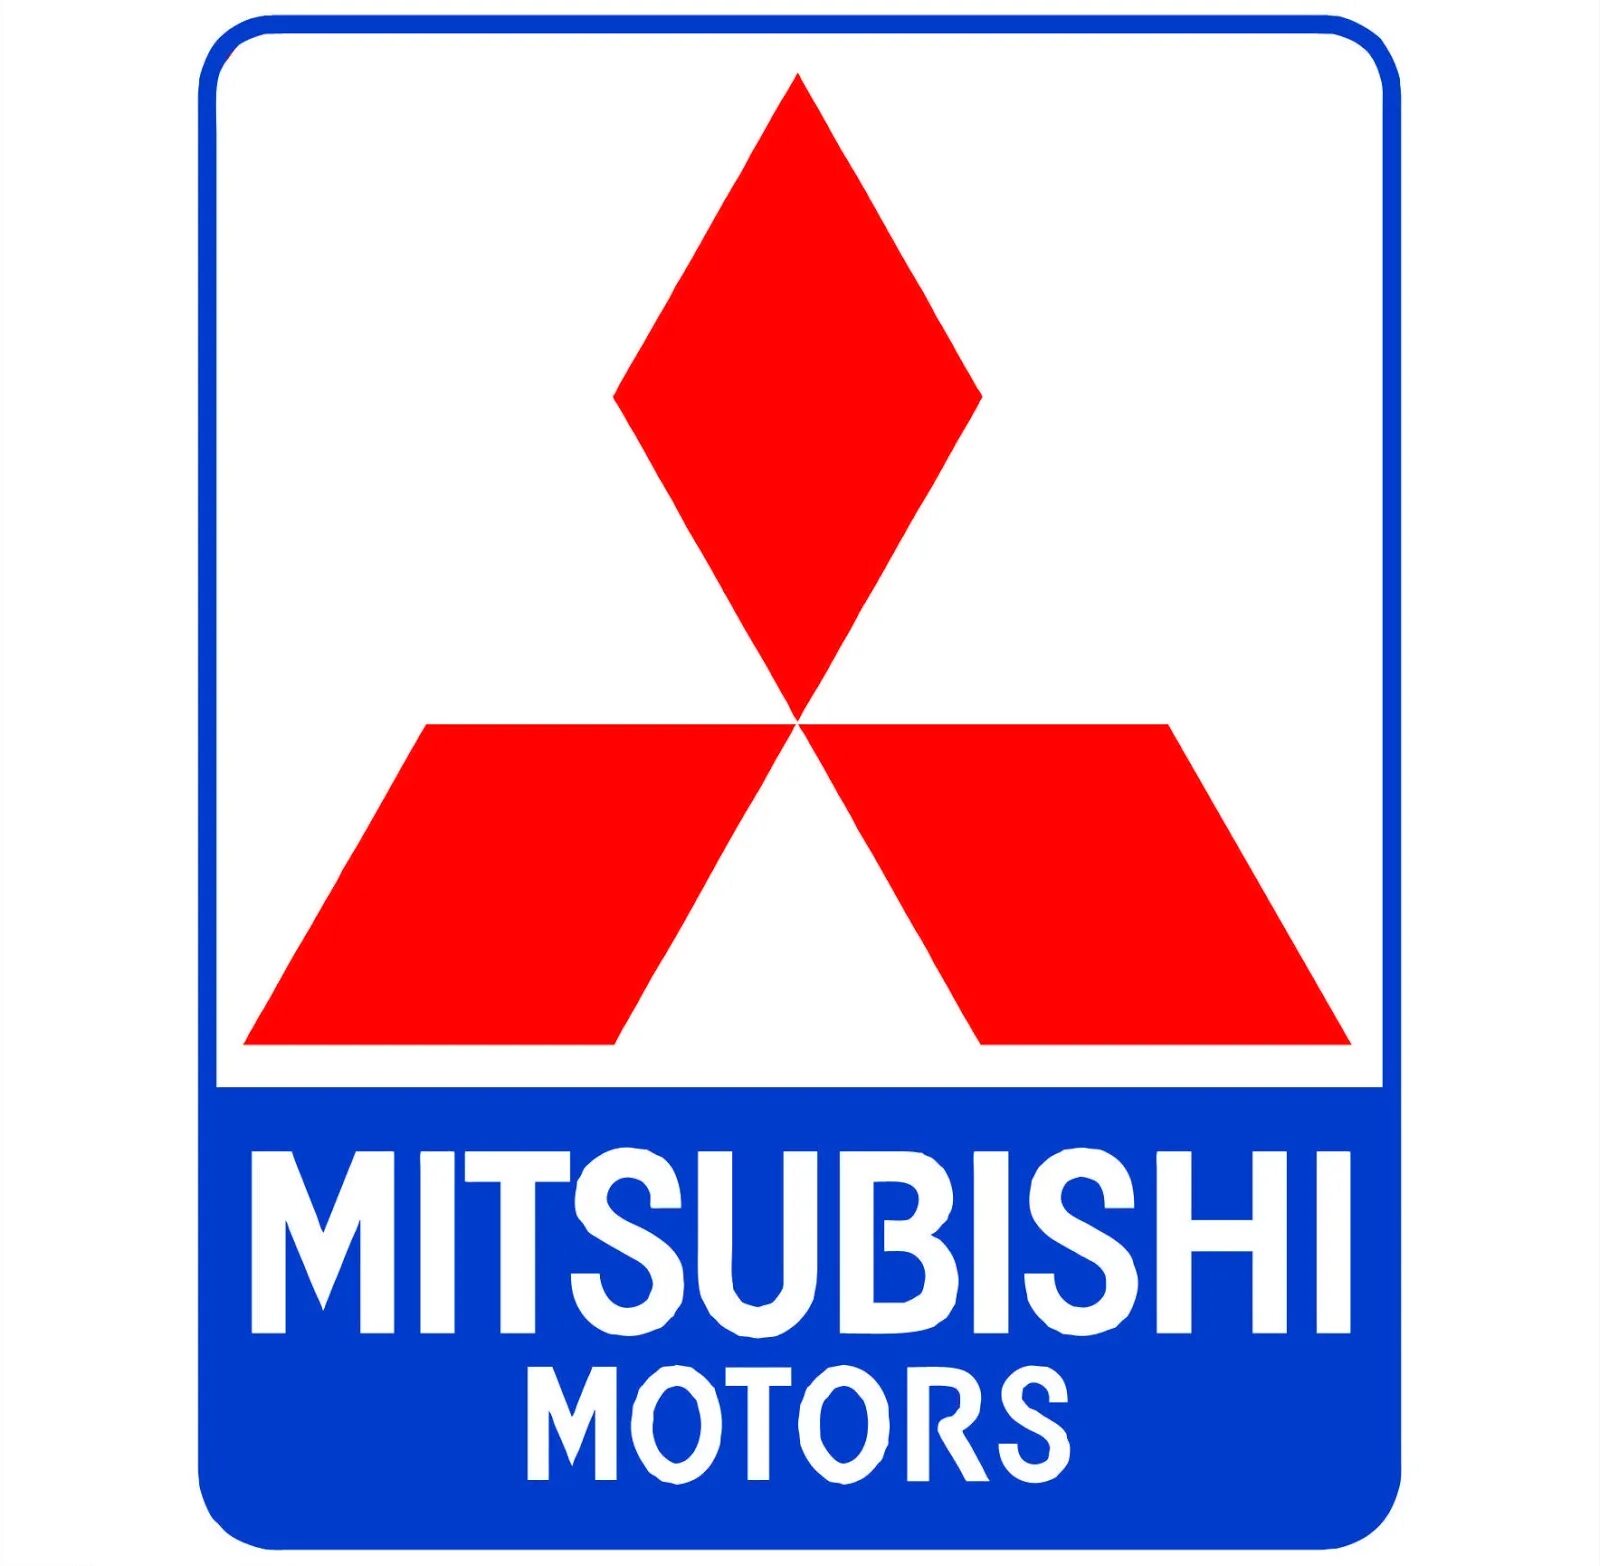 Логотип mitsubishi. Эмблема Митсубиси. Mitsubishi знак. Фирменный знак Митсубиси. Митсубиши Моторс логотип.